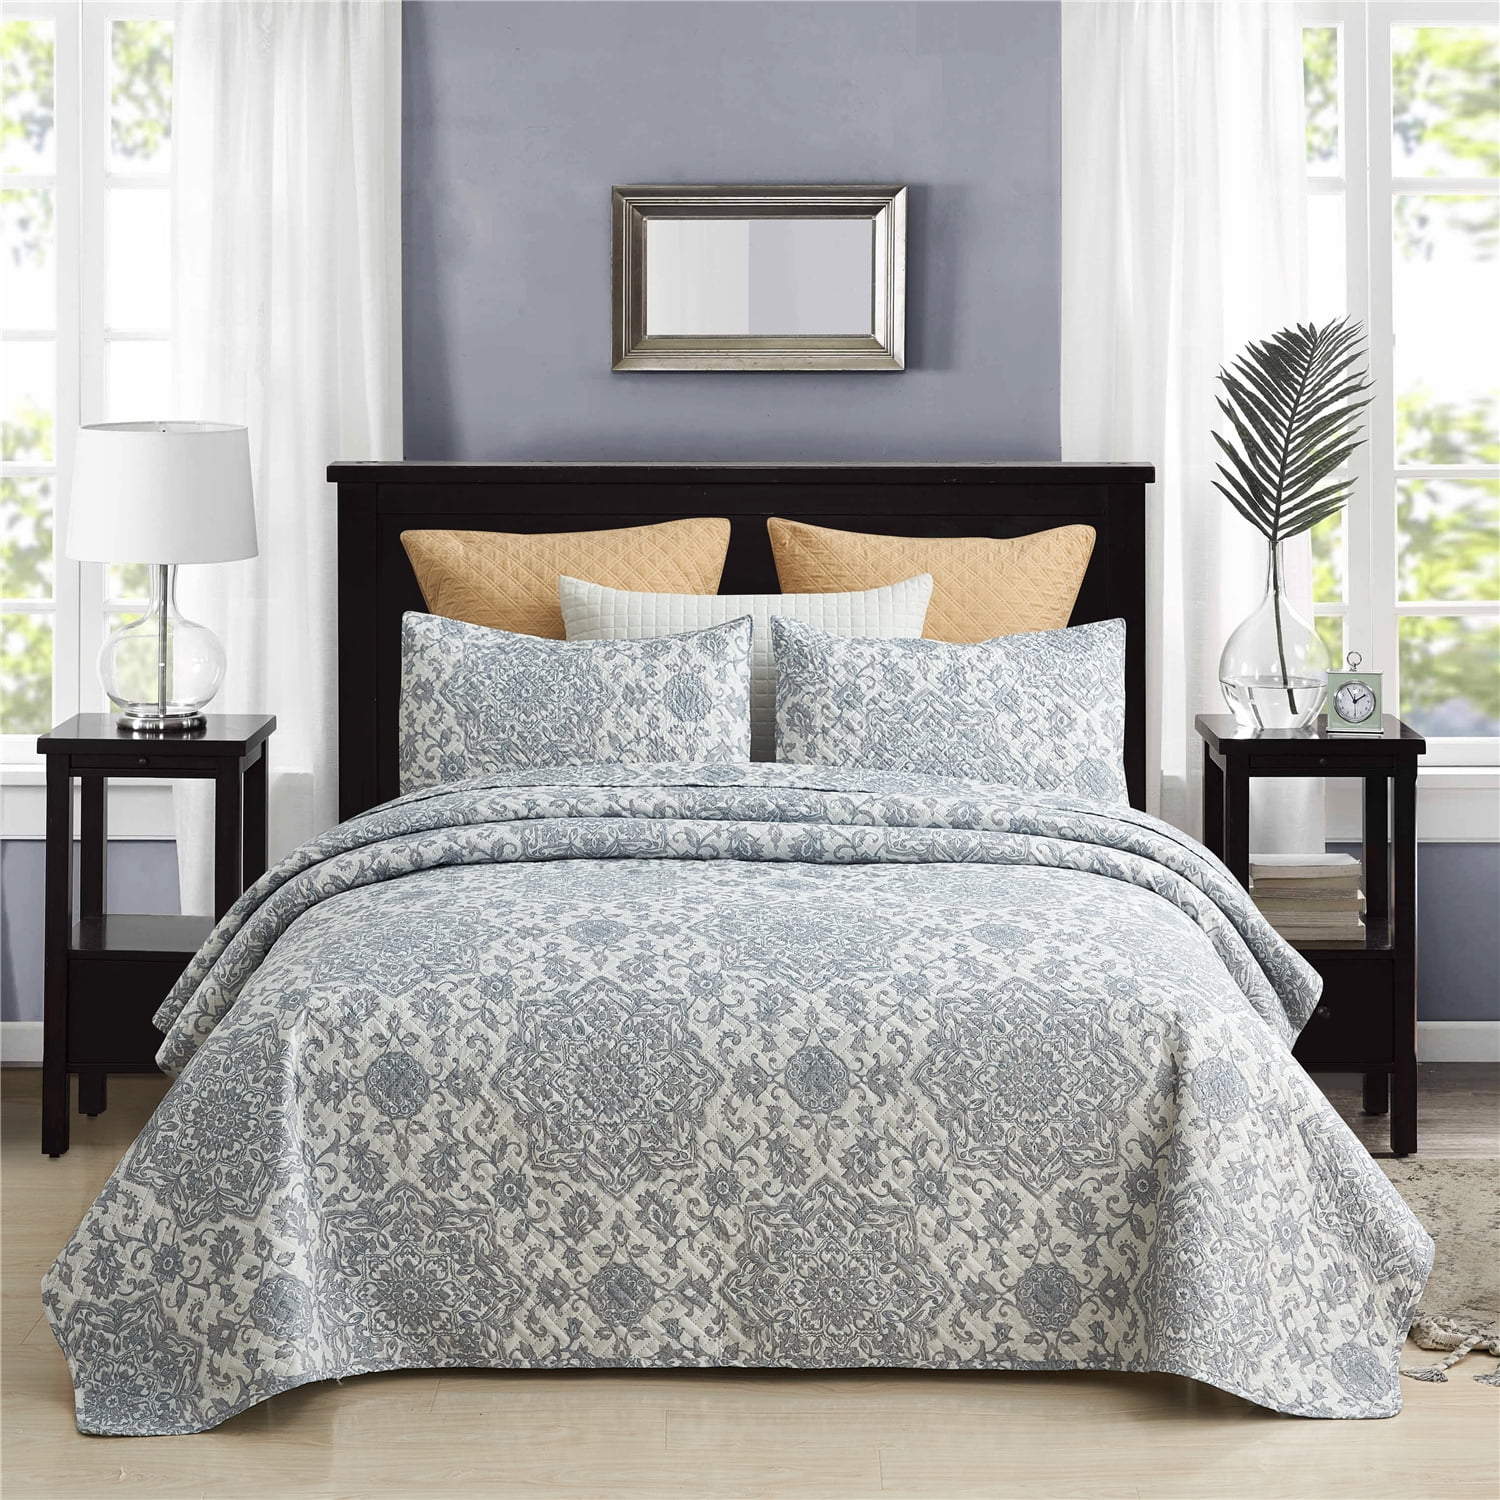 Comforter Soft Microfiber Comforter Set King/Queen Coverlets Duvet Pillow Shams 